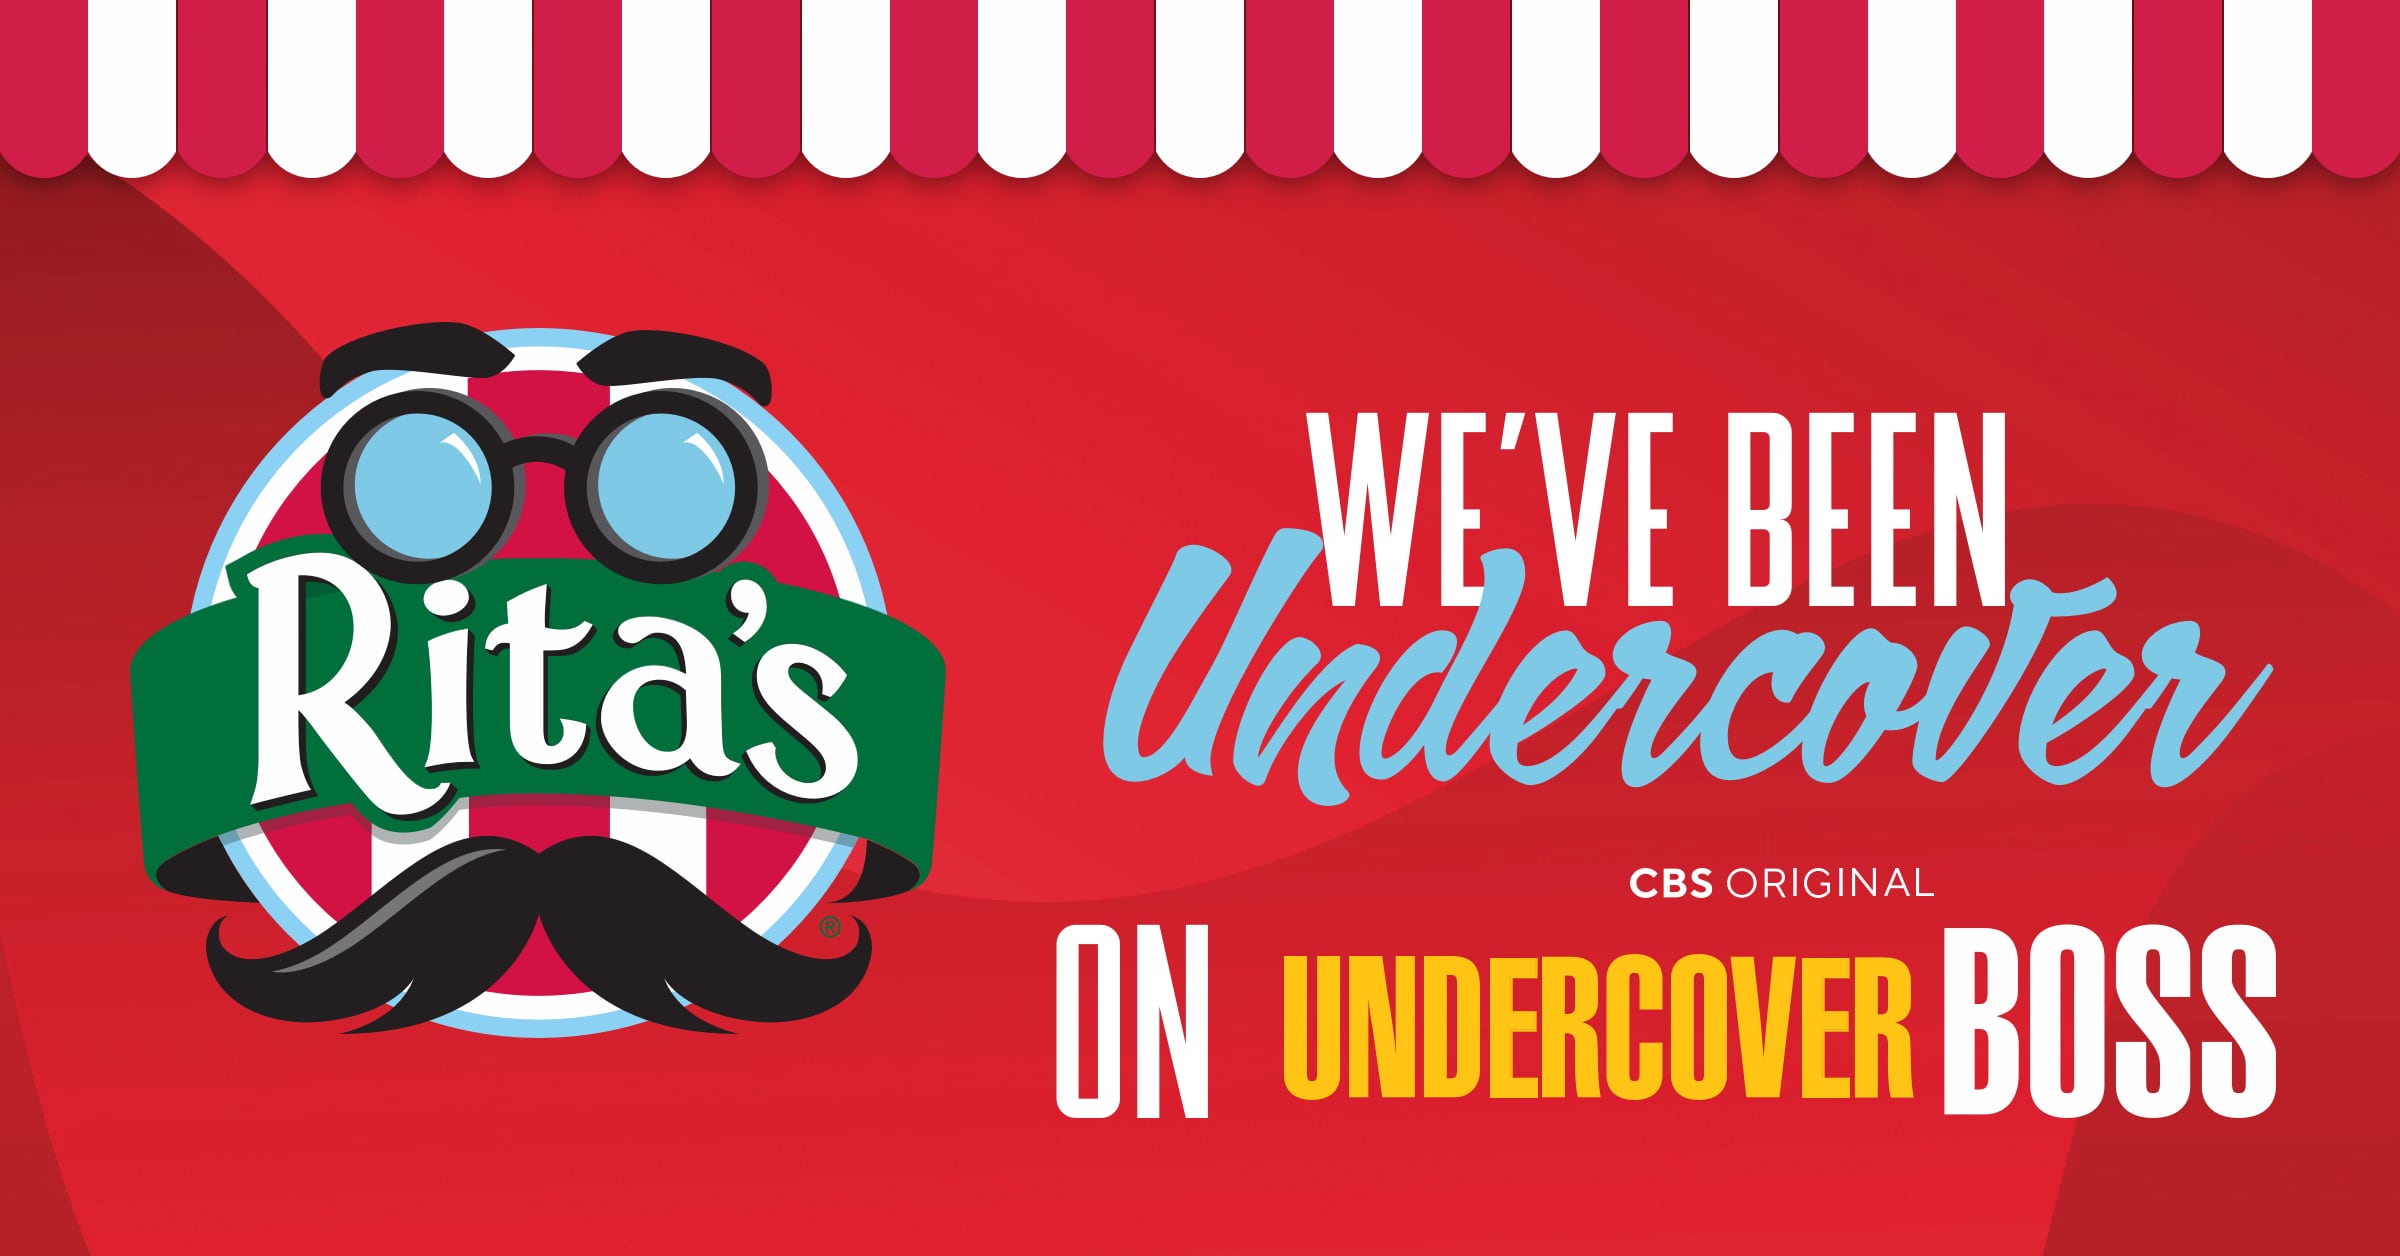 We've been Undercover on Undercover Boss